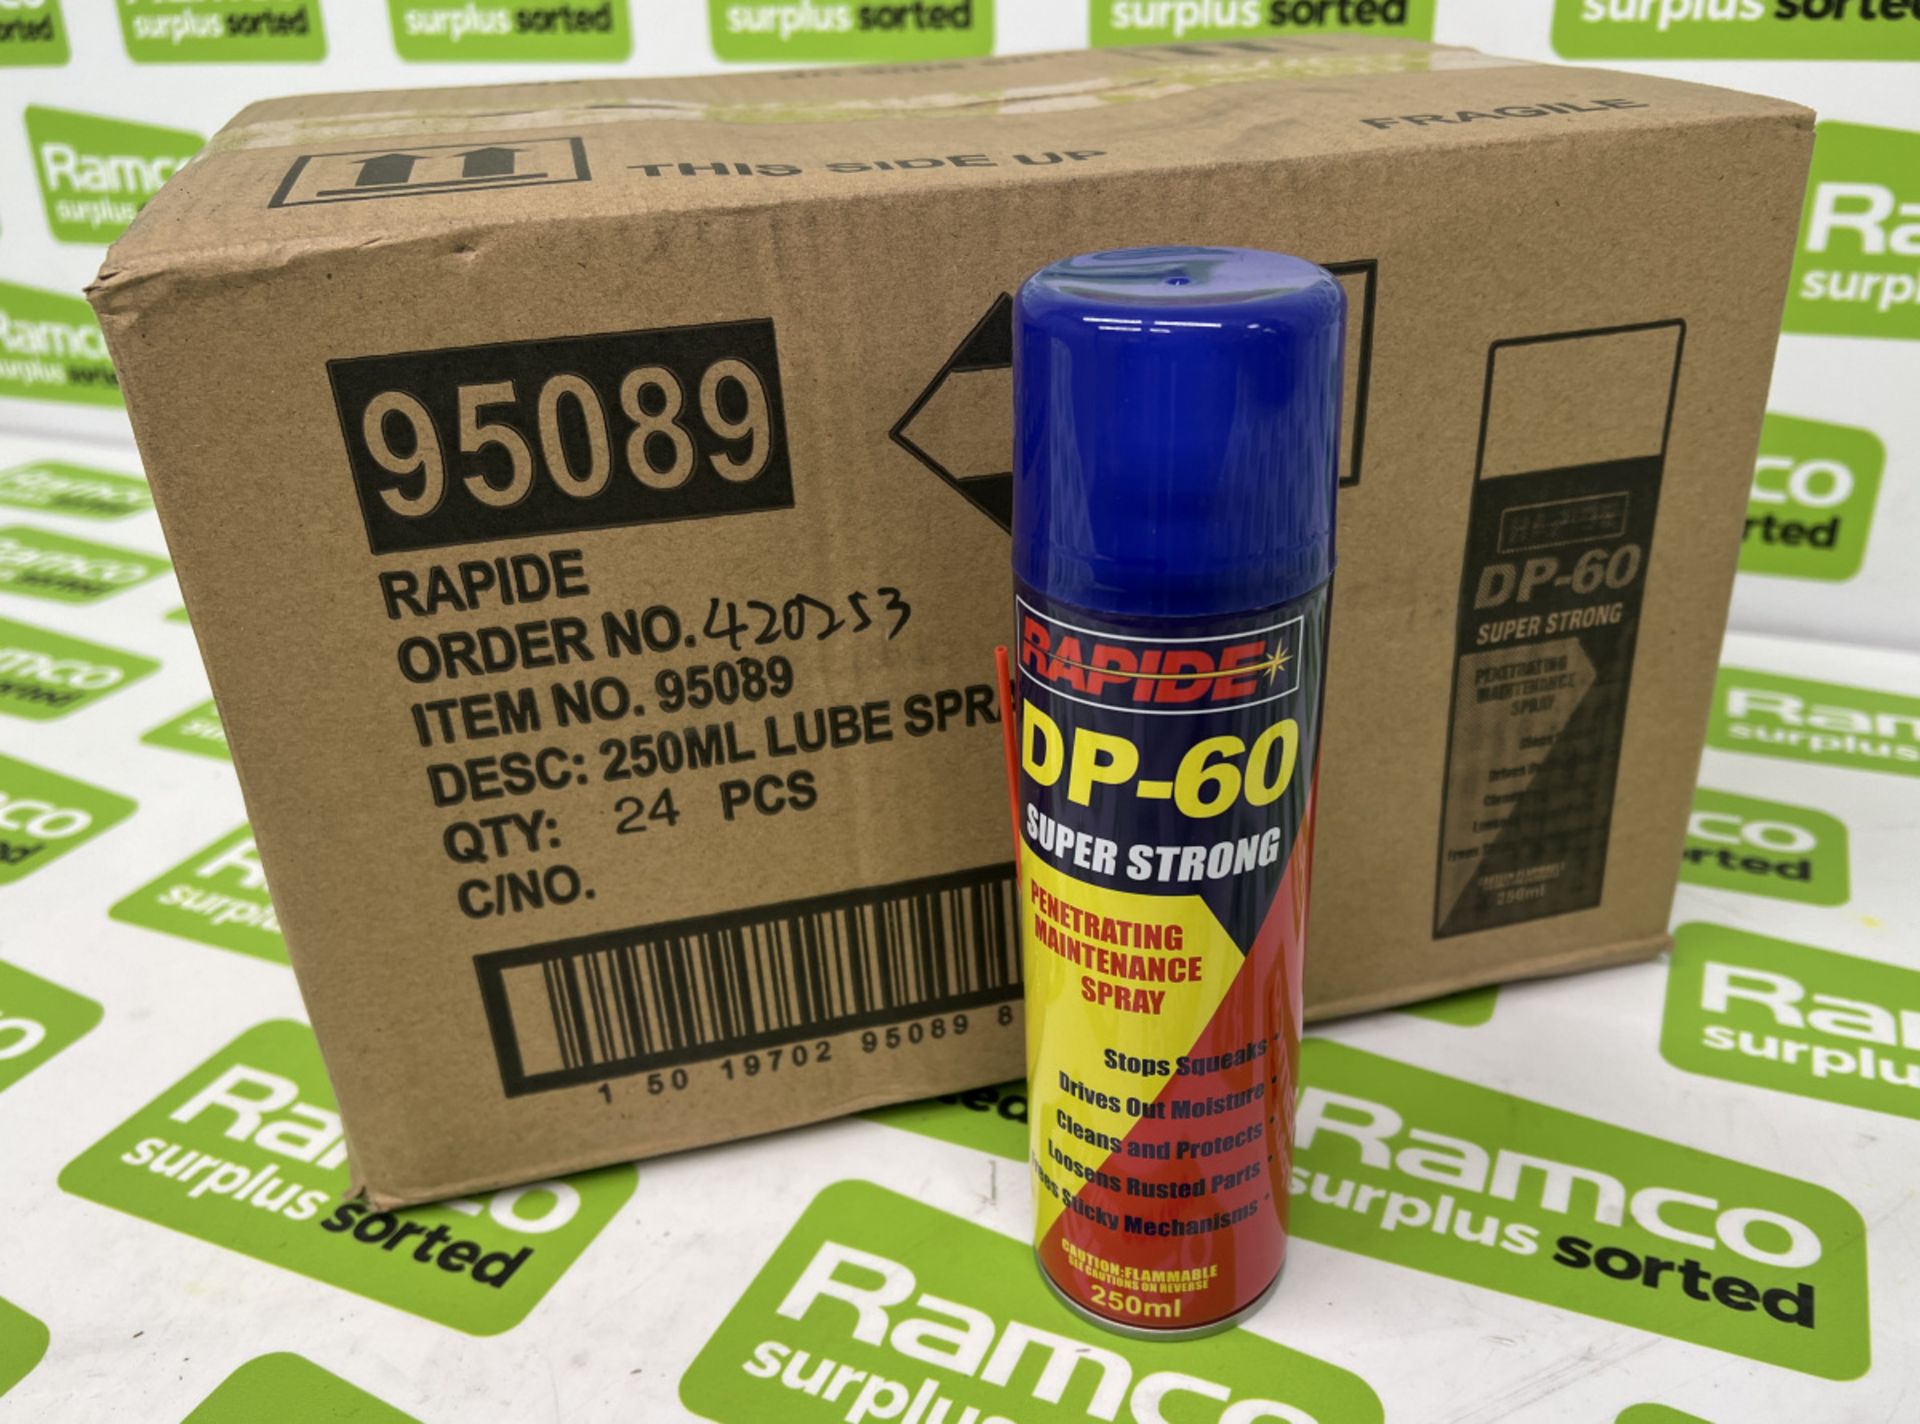 Rapide DP-60 super strong maintenance penetration spray 250ml tins - 24 tins - Image 2 of 2